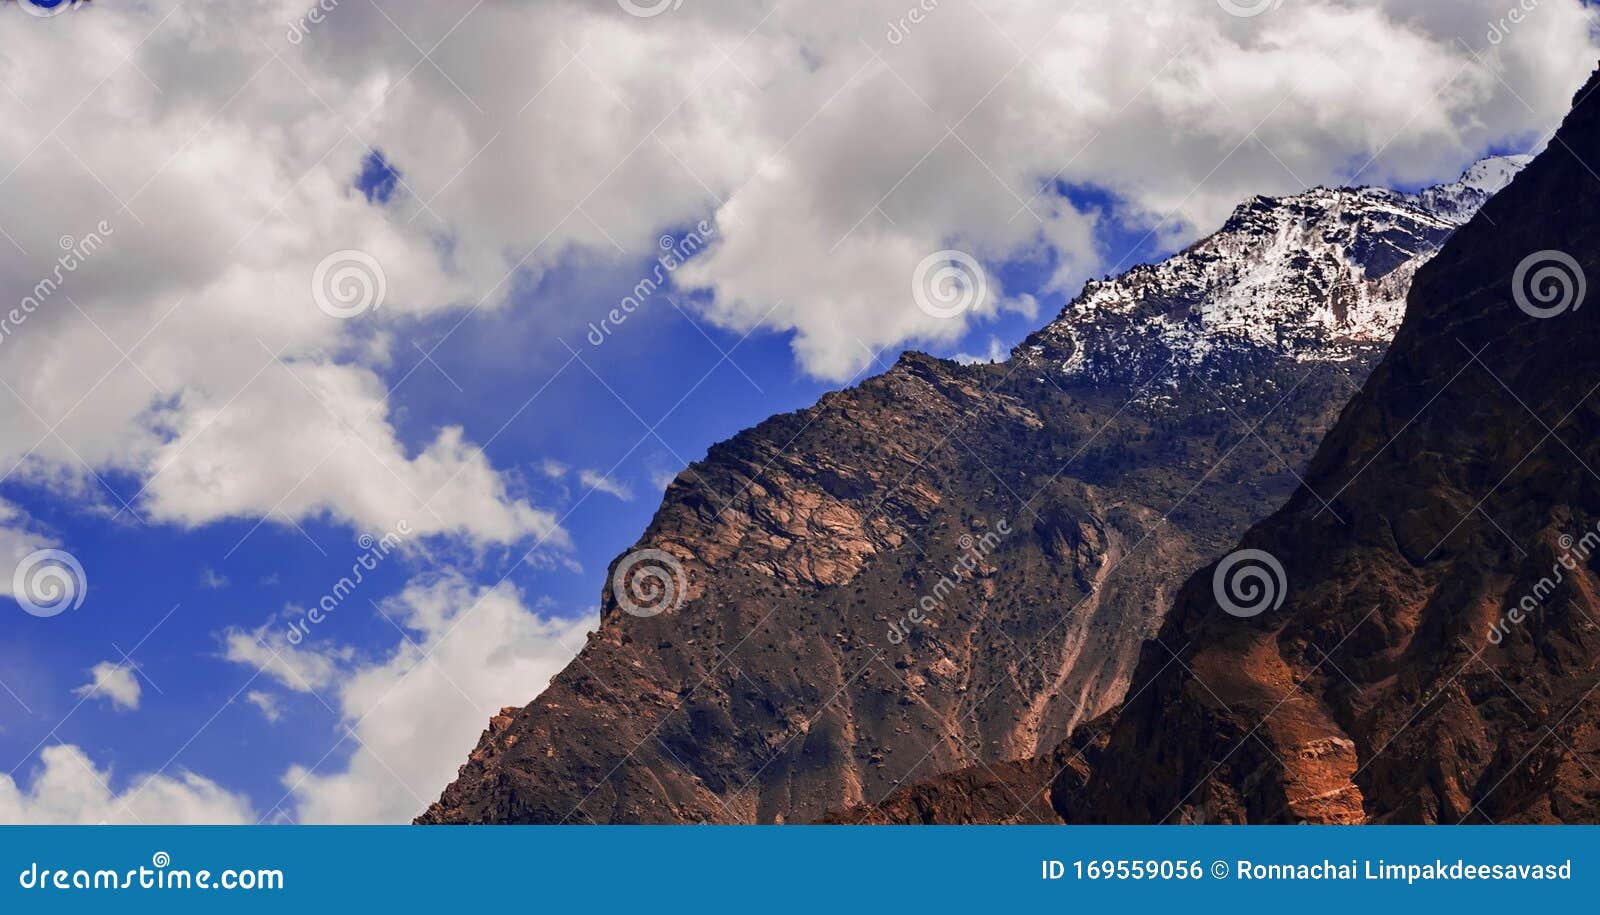 nature landscape view of snow capped rakaposhi peak in karakoram mountain range in nagar valley. autumn scenery in gilgit baltista